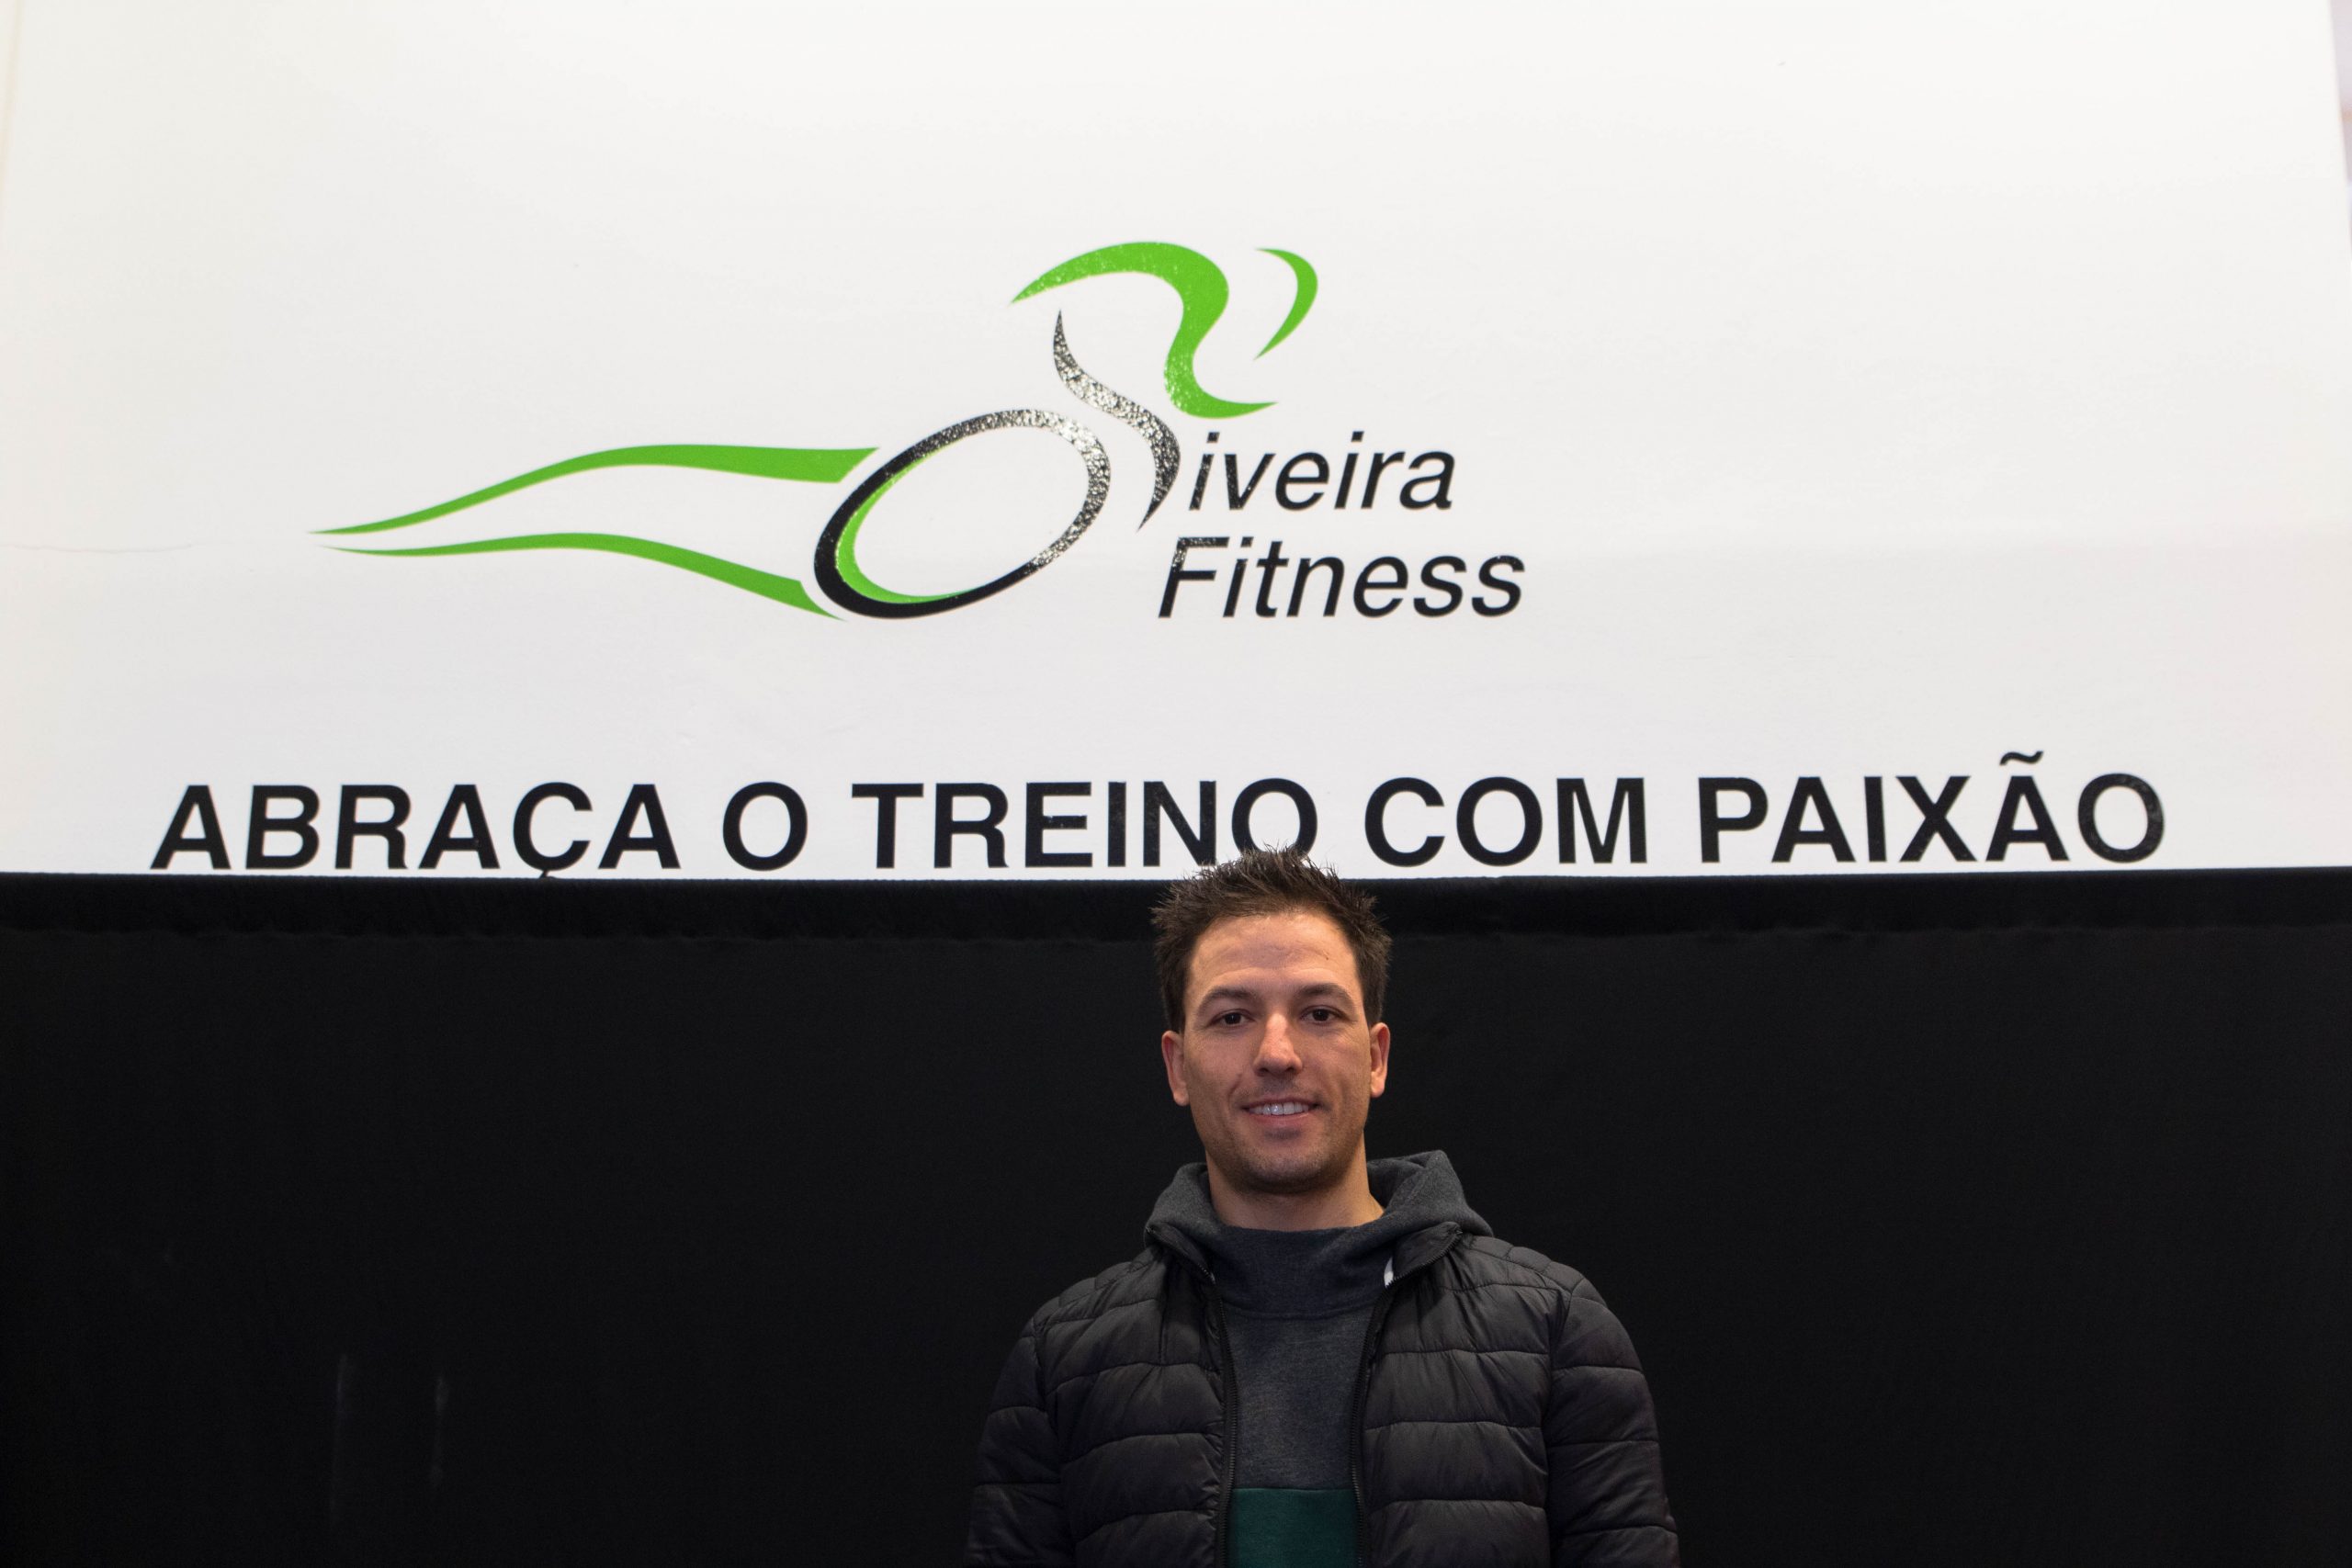 Oliveira Fitness